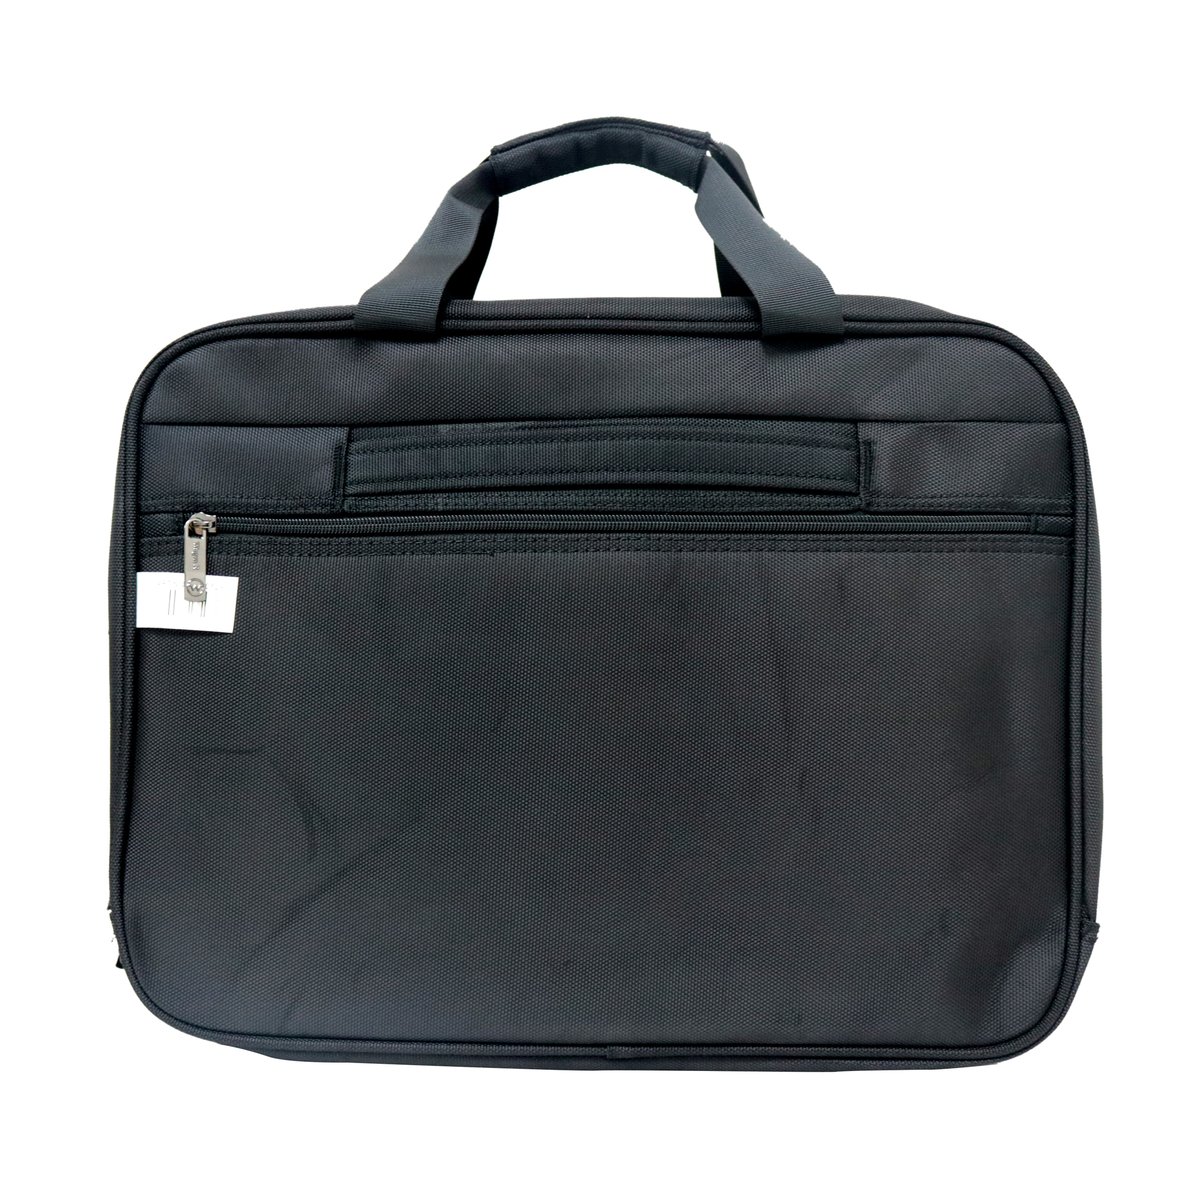 Wagon-R Laptop Bag 17in LB1633